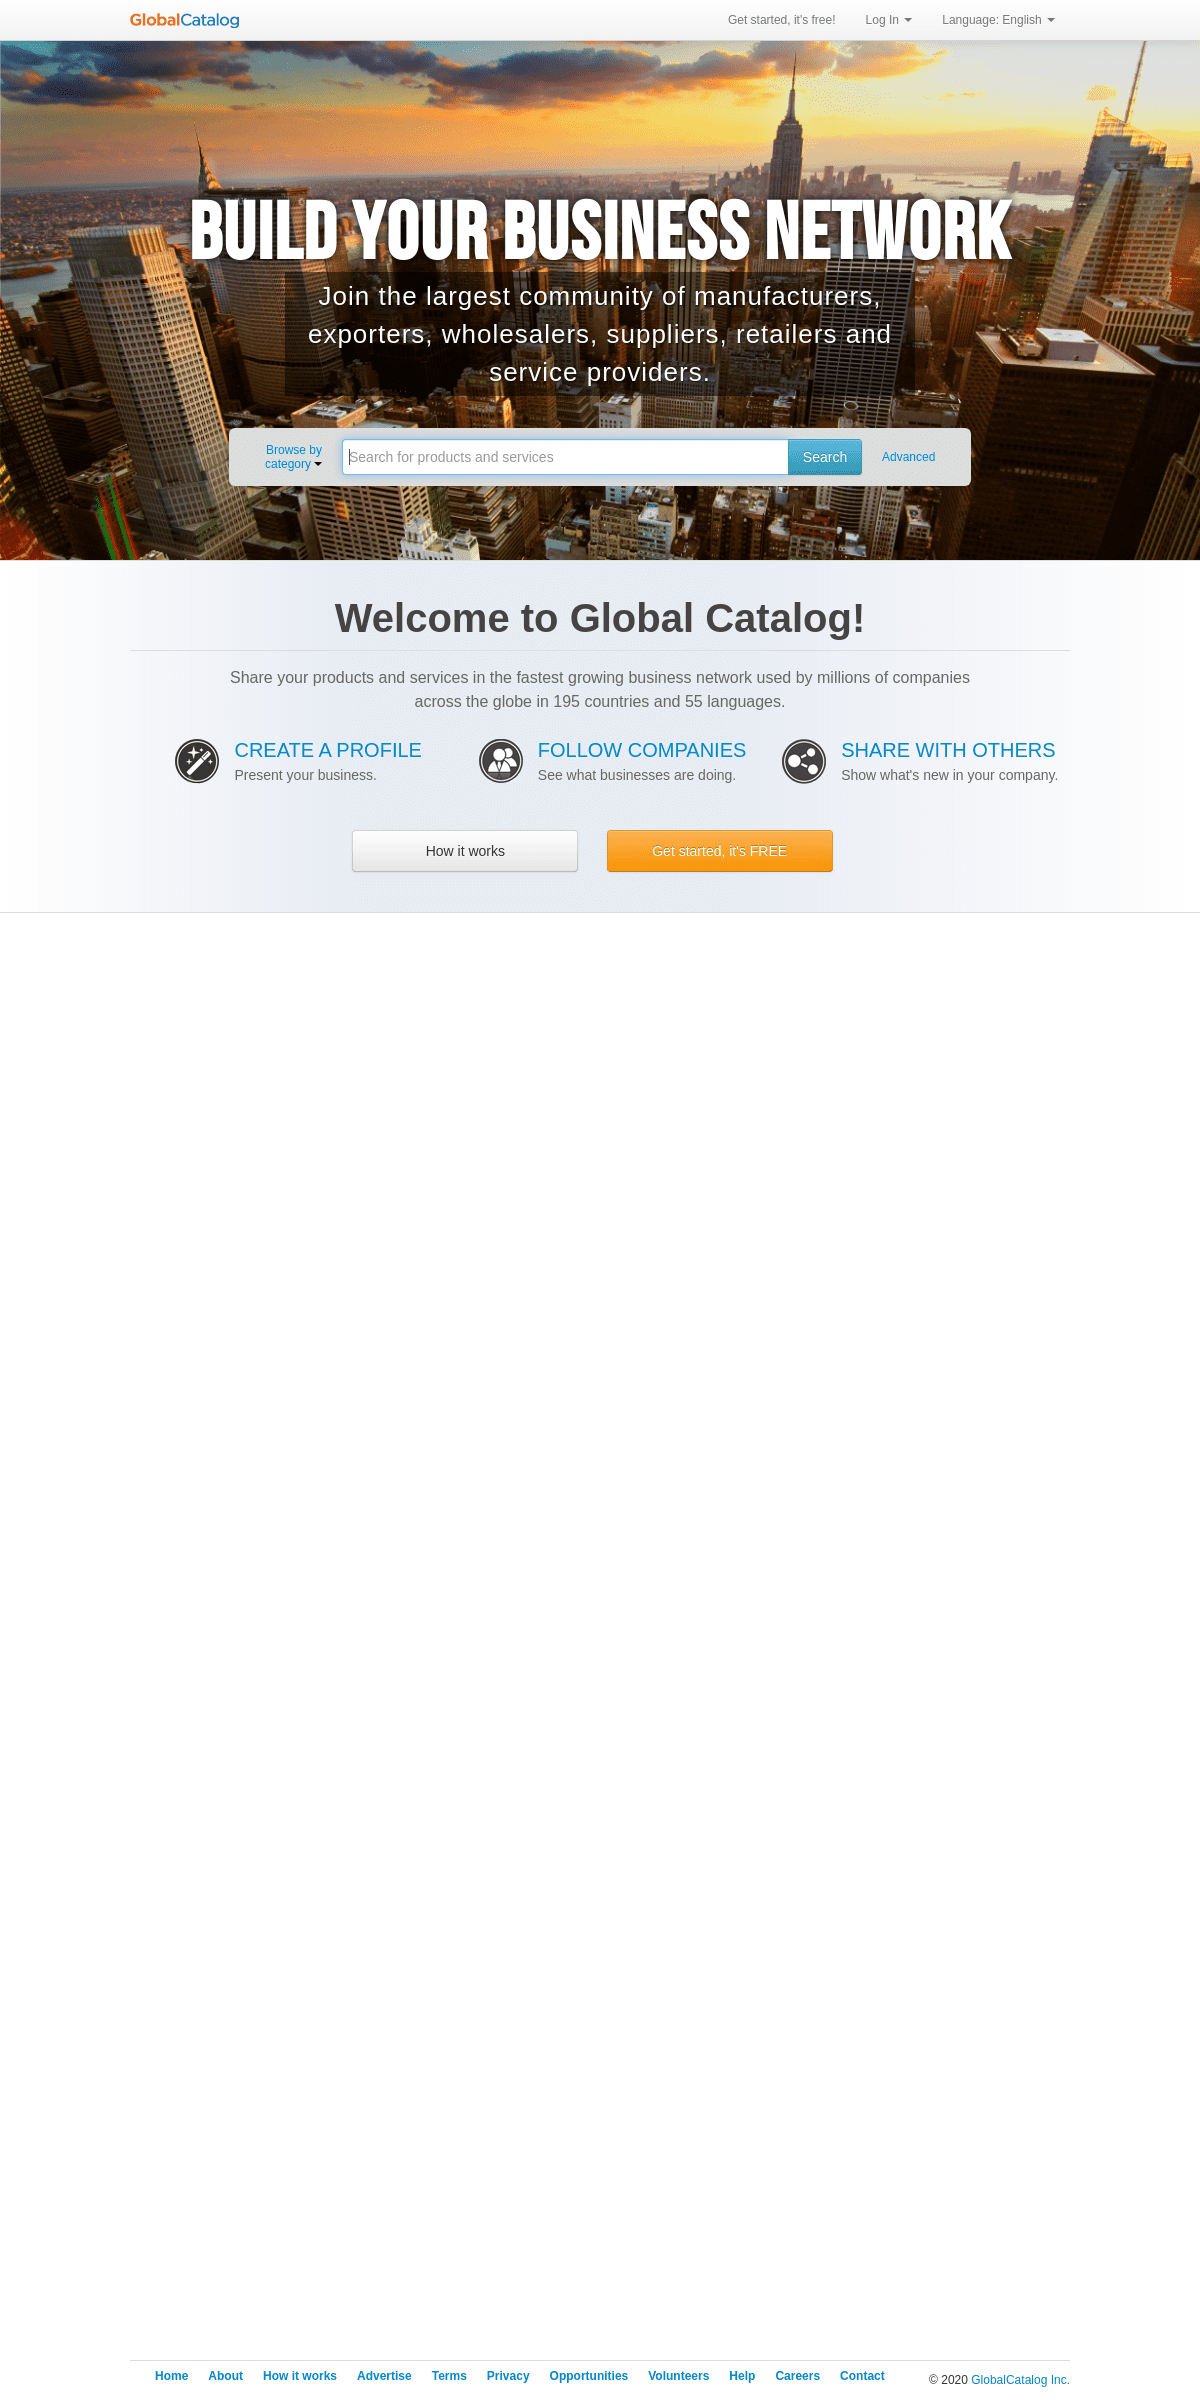 A complete backup of globalcatalog.com